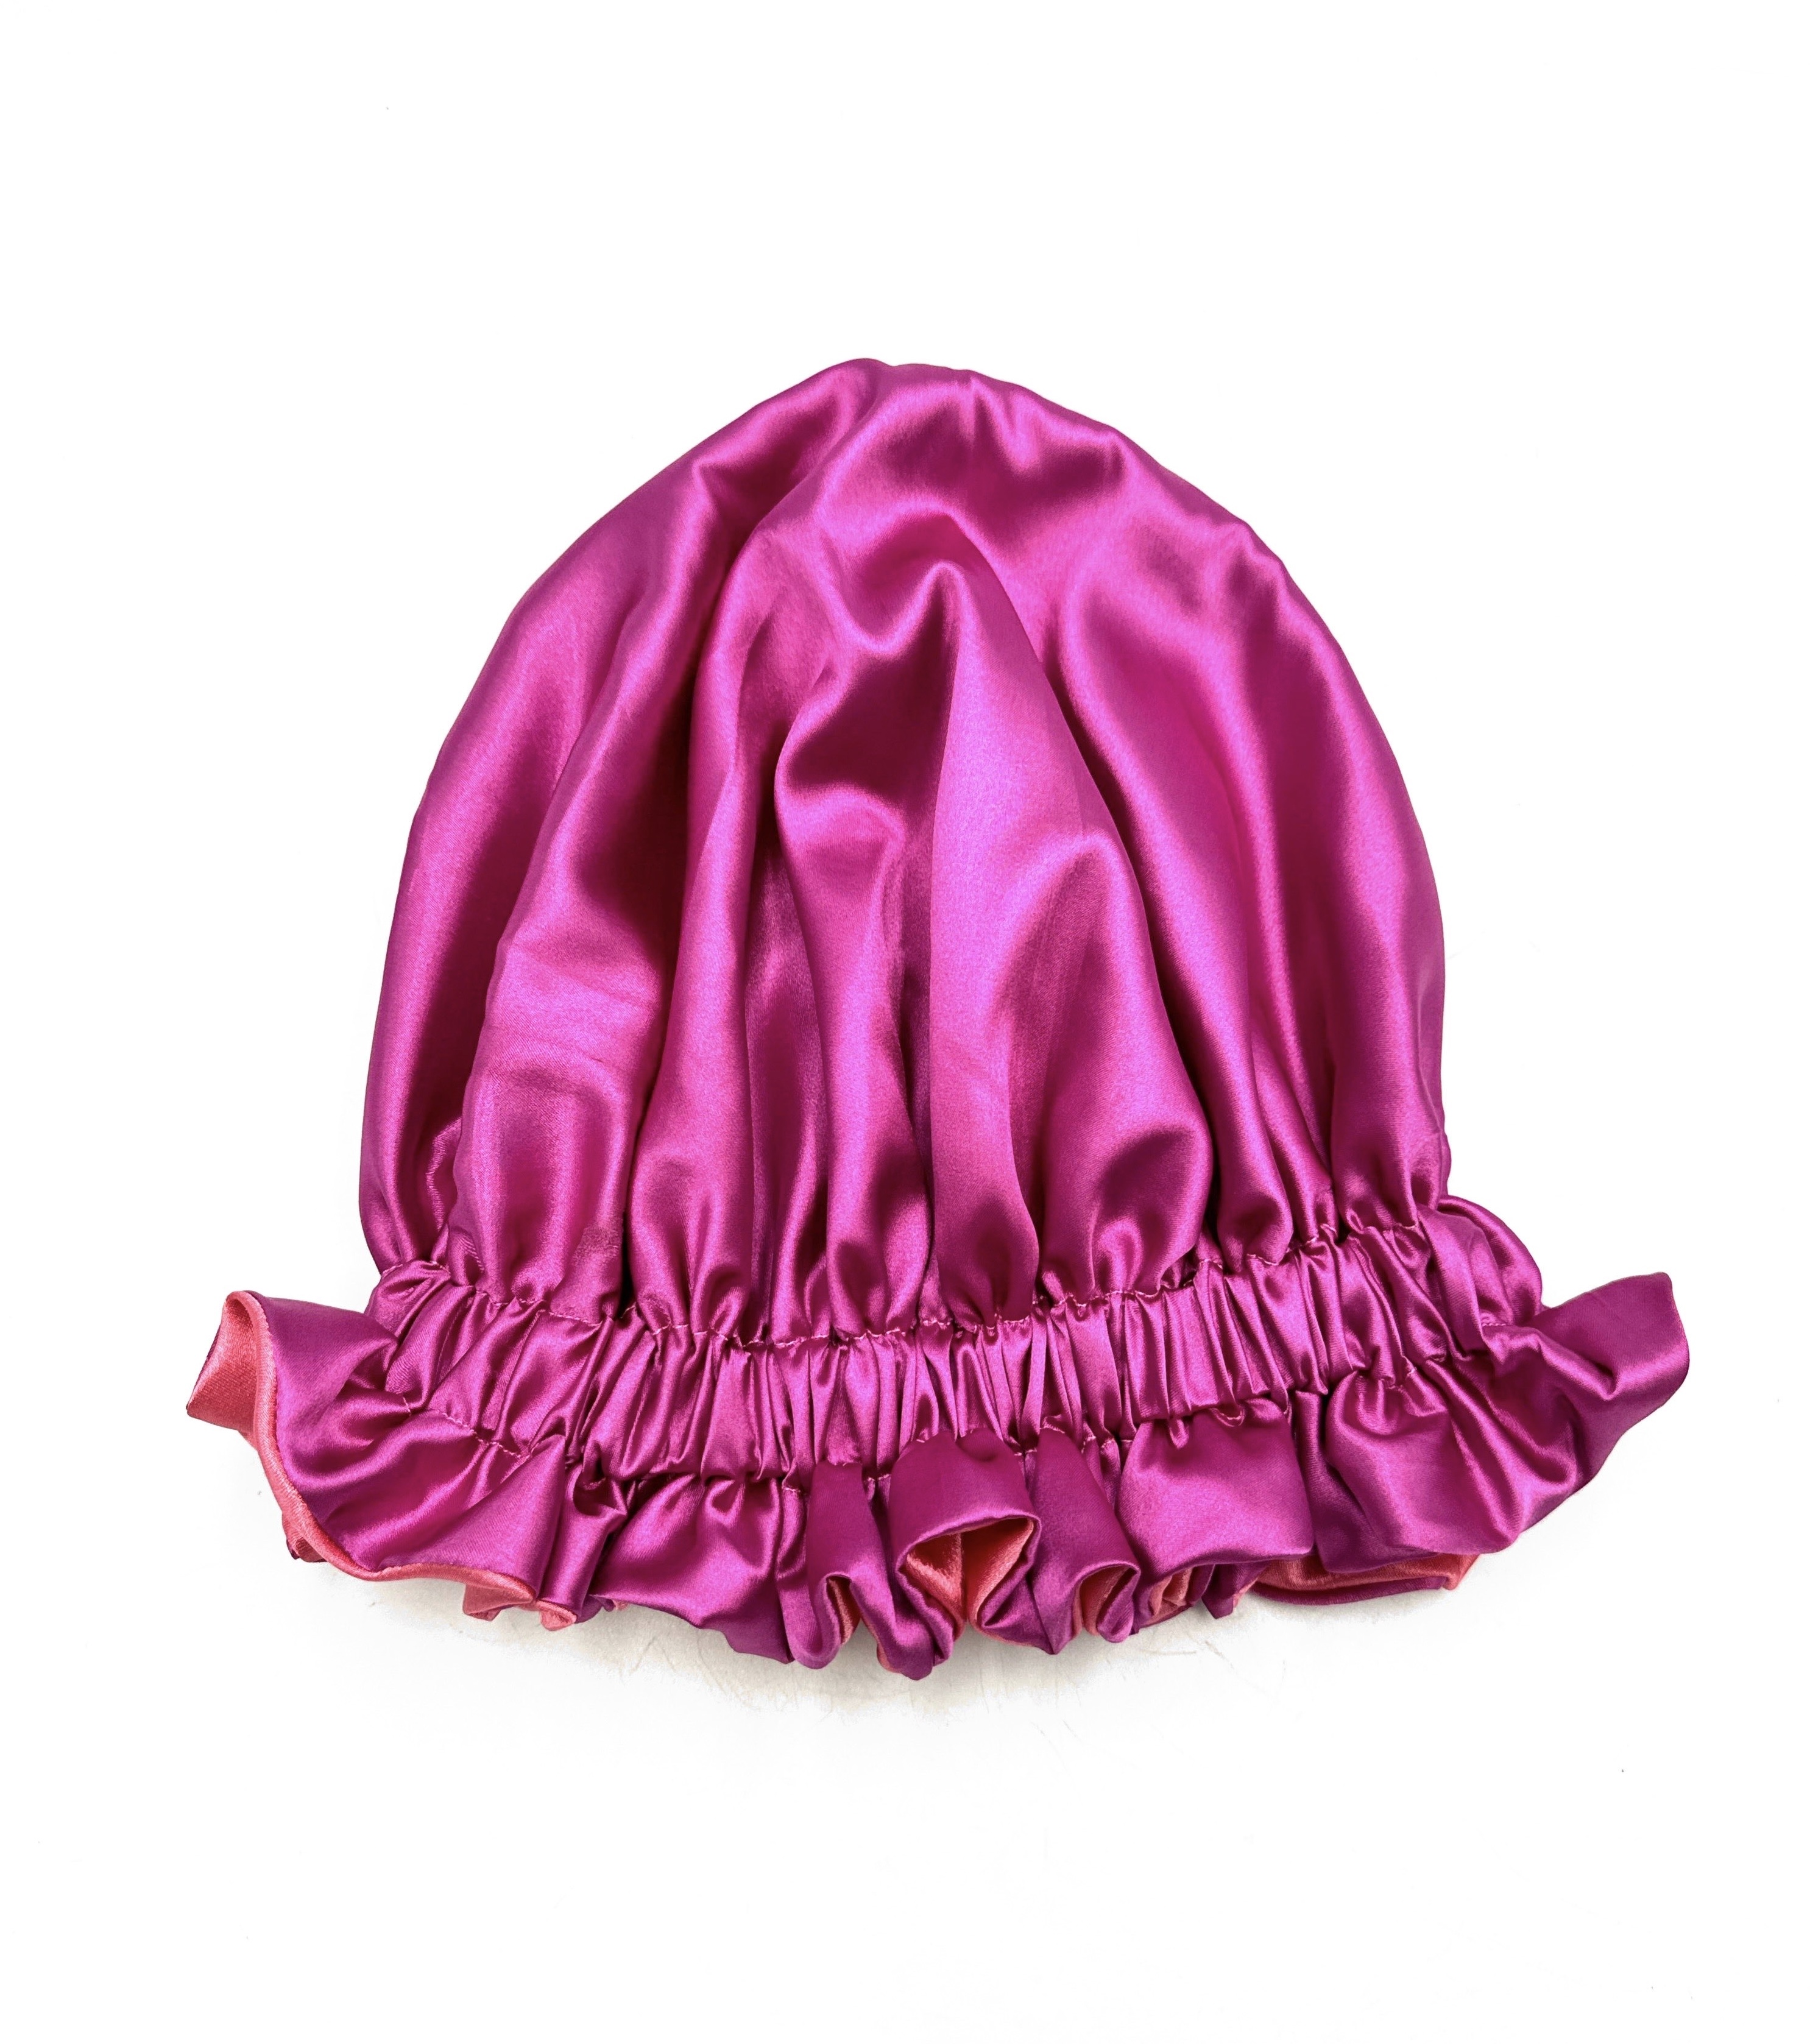 Pink/Peach Ruffle Bonnet – Adult Size